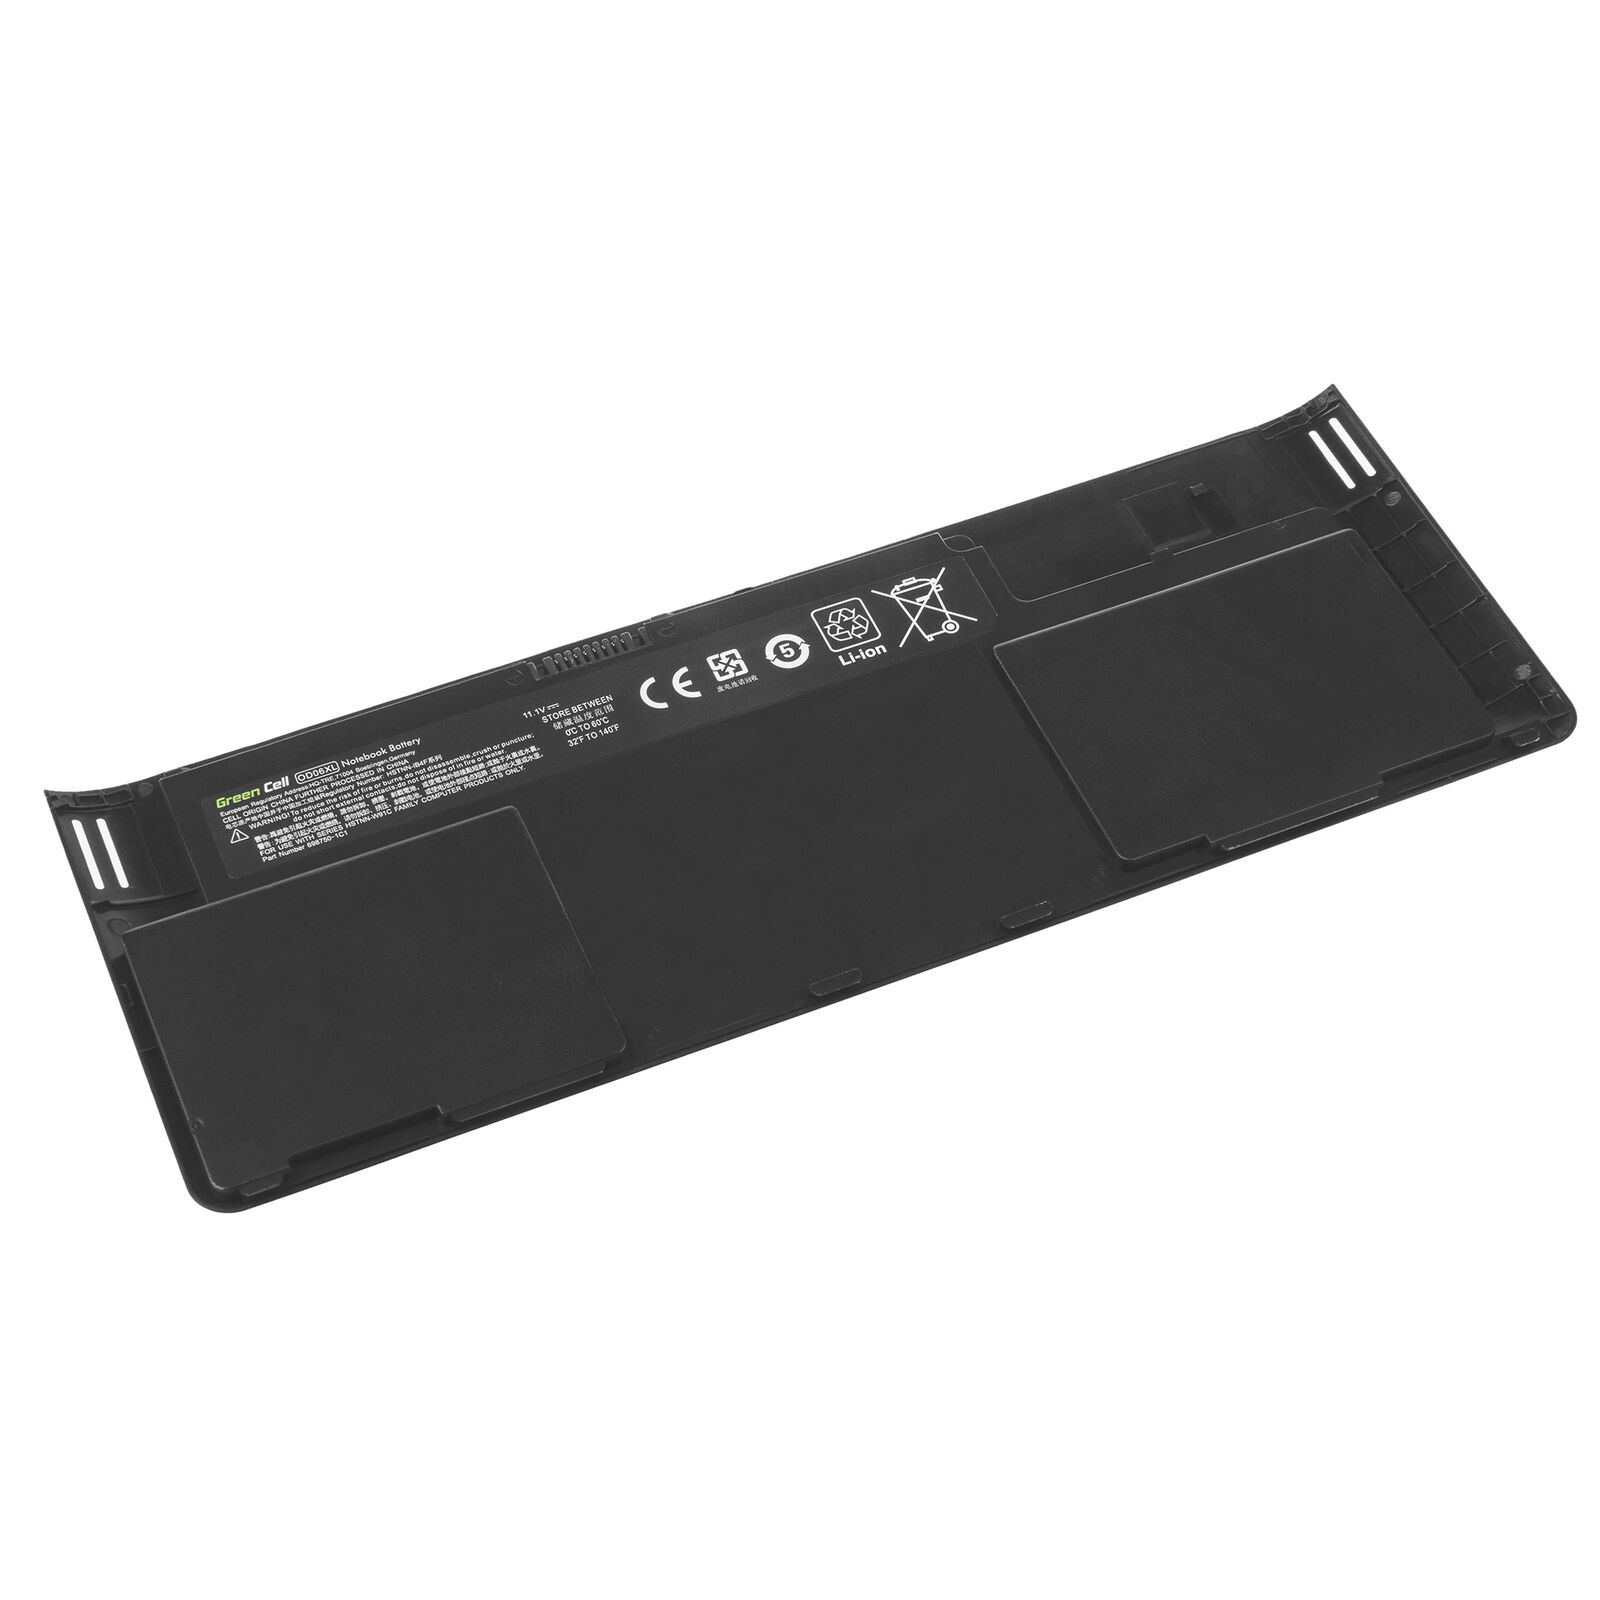 Batería para HP Revolve 810, Tablet PC, H6L25AA, OD06XL HSTNN-IB4F(compatible)